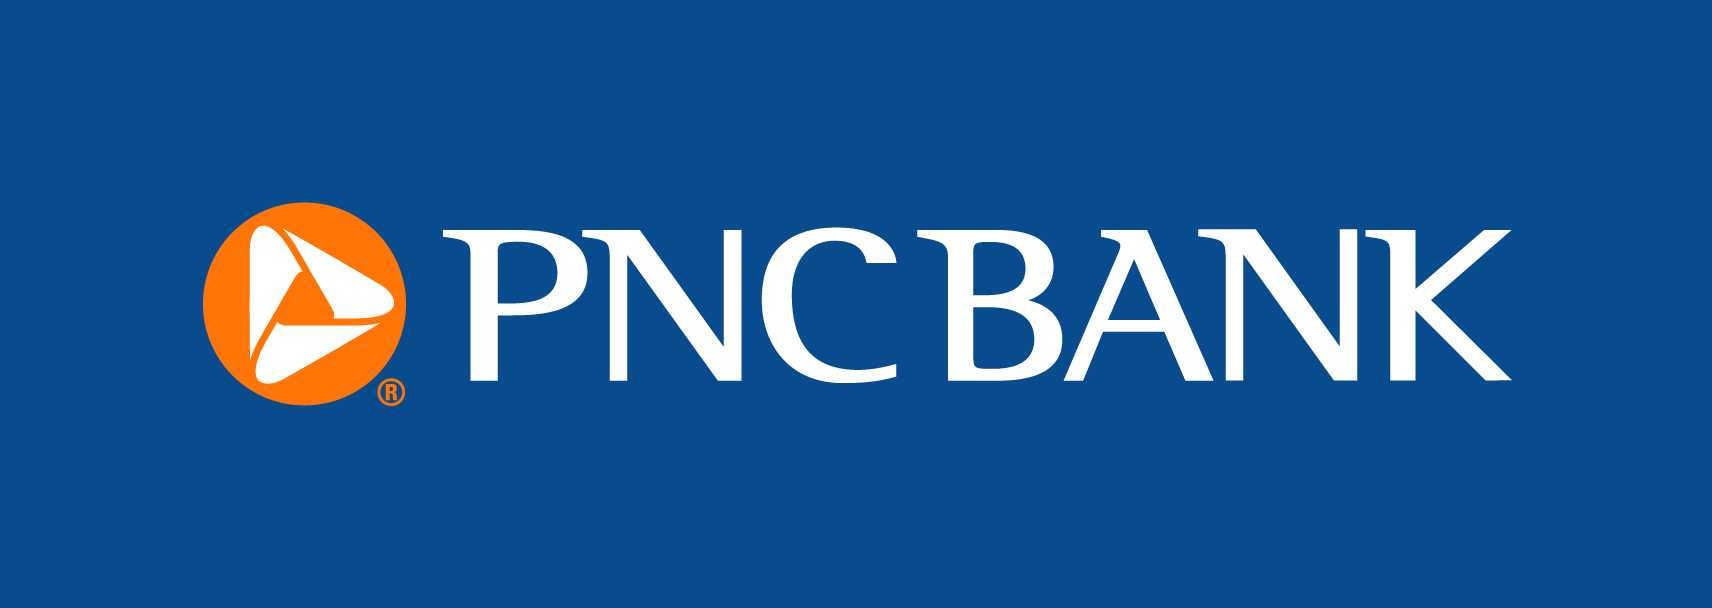 pnc customer service, pnc bank number